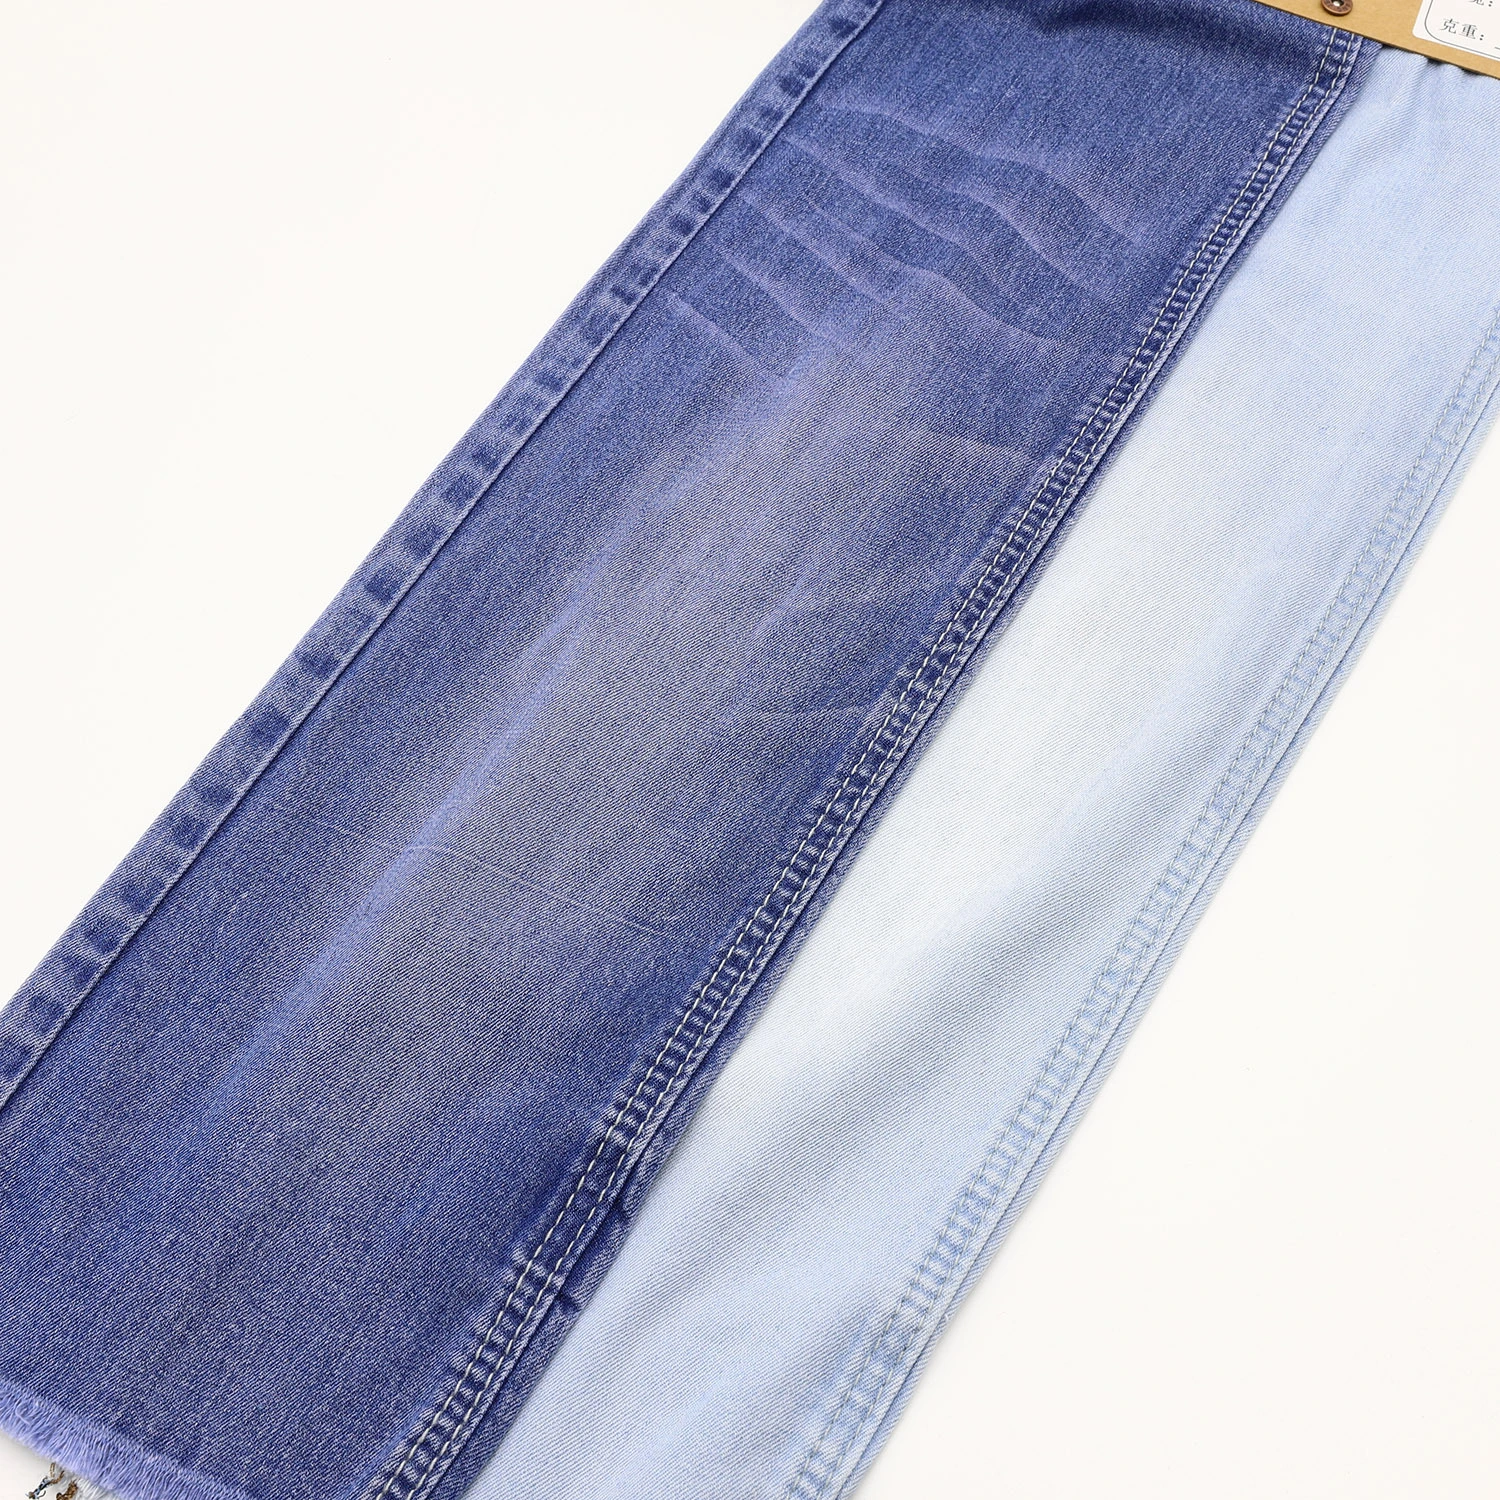 231A-3  Tencel stretch denim fabric with 68%Tencel   29%Poly  2%Viscose  1%Spandex 4